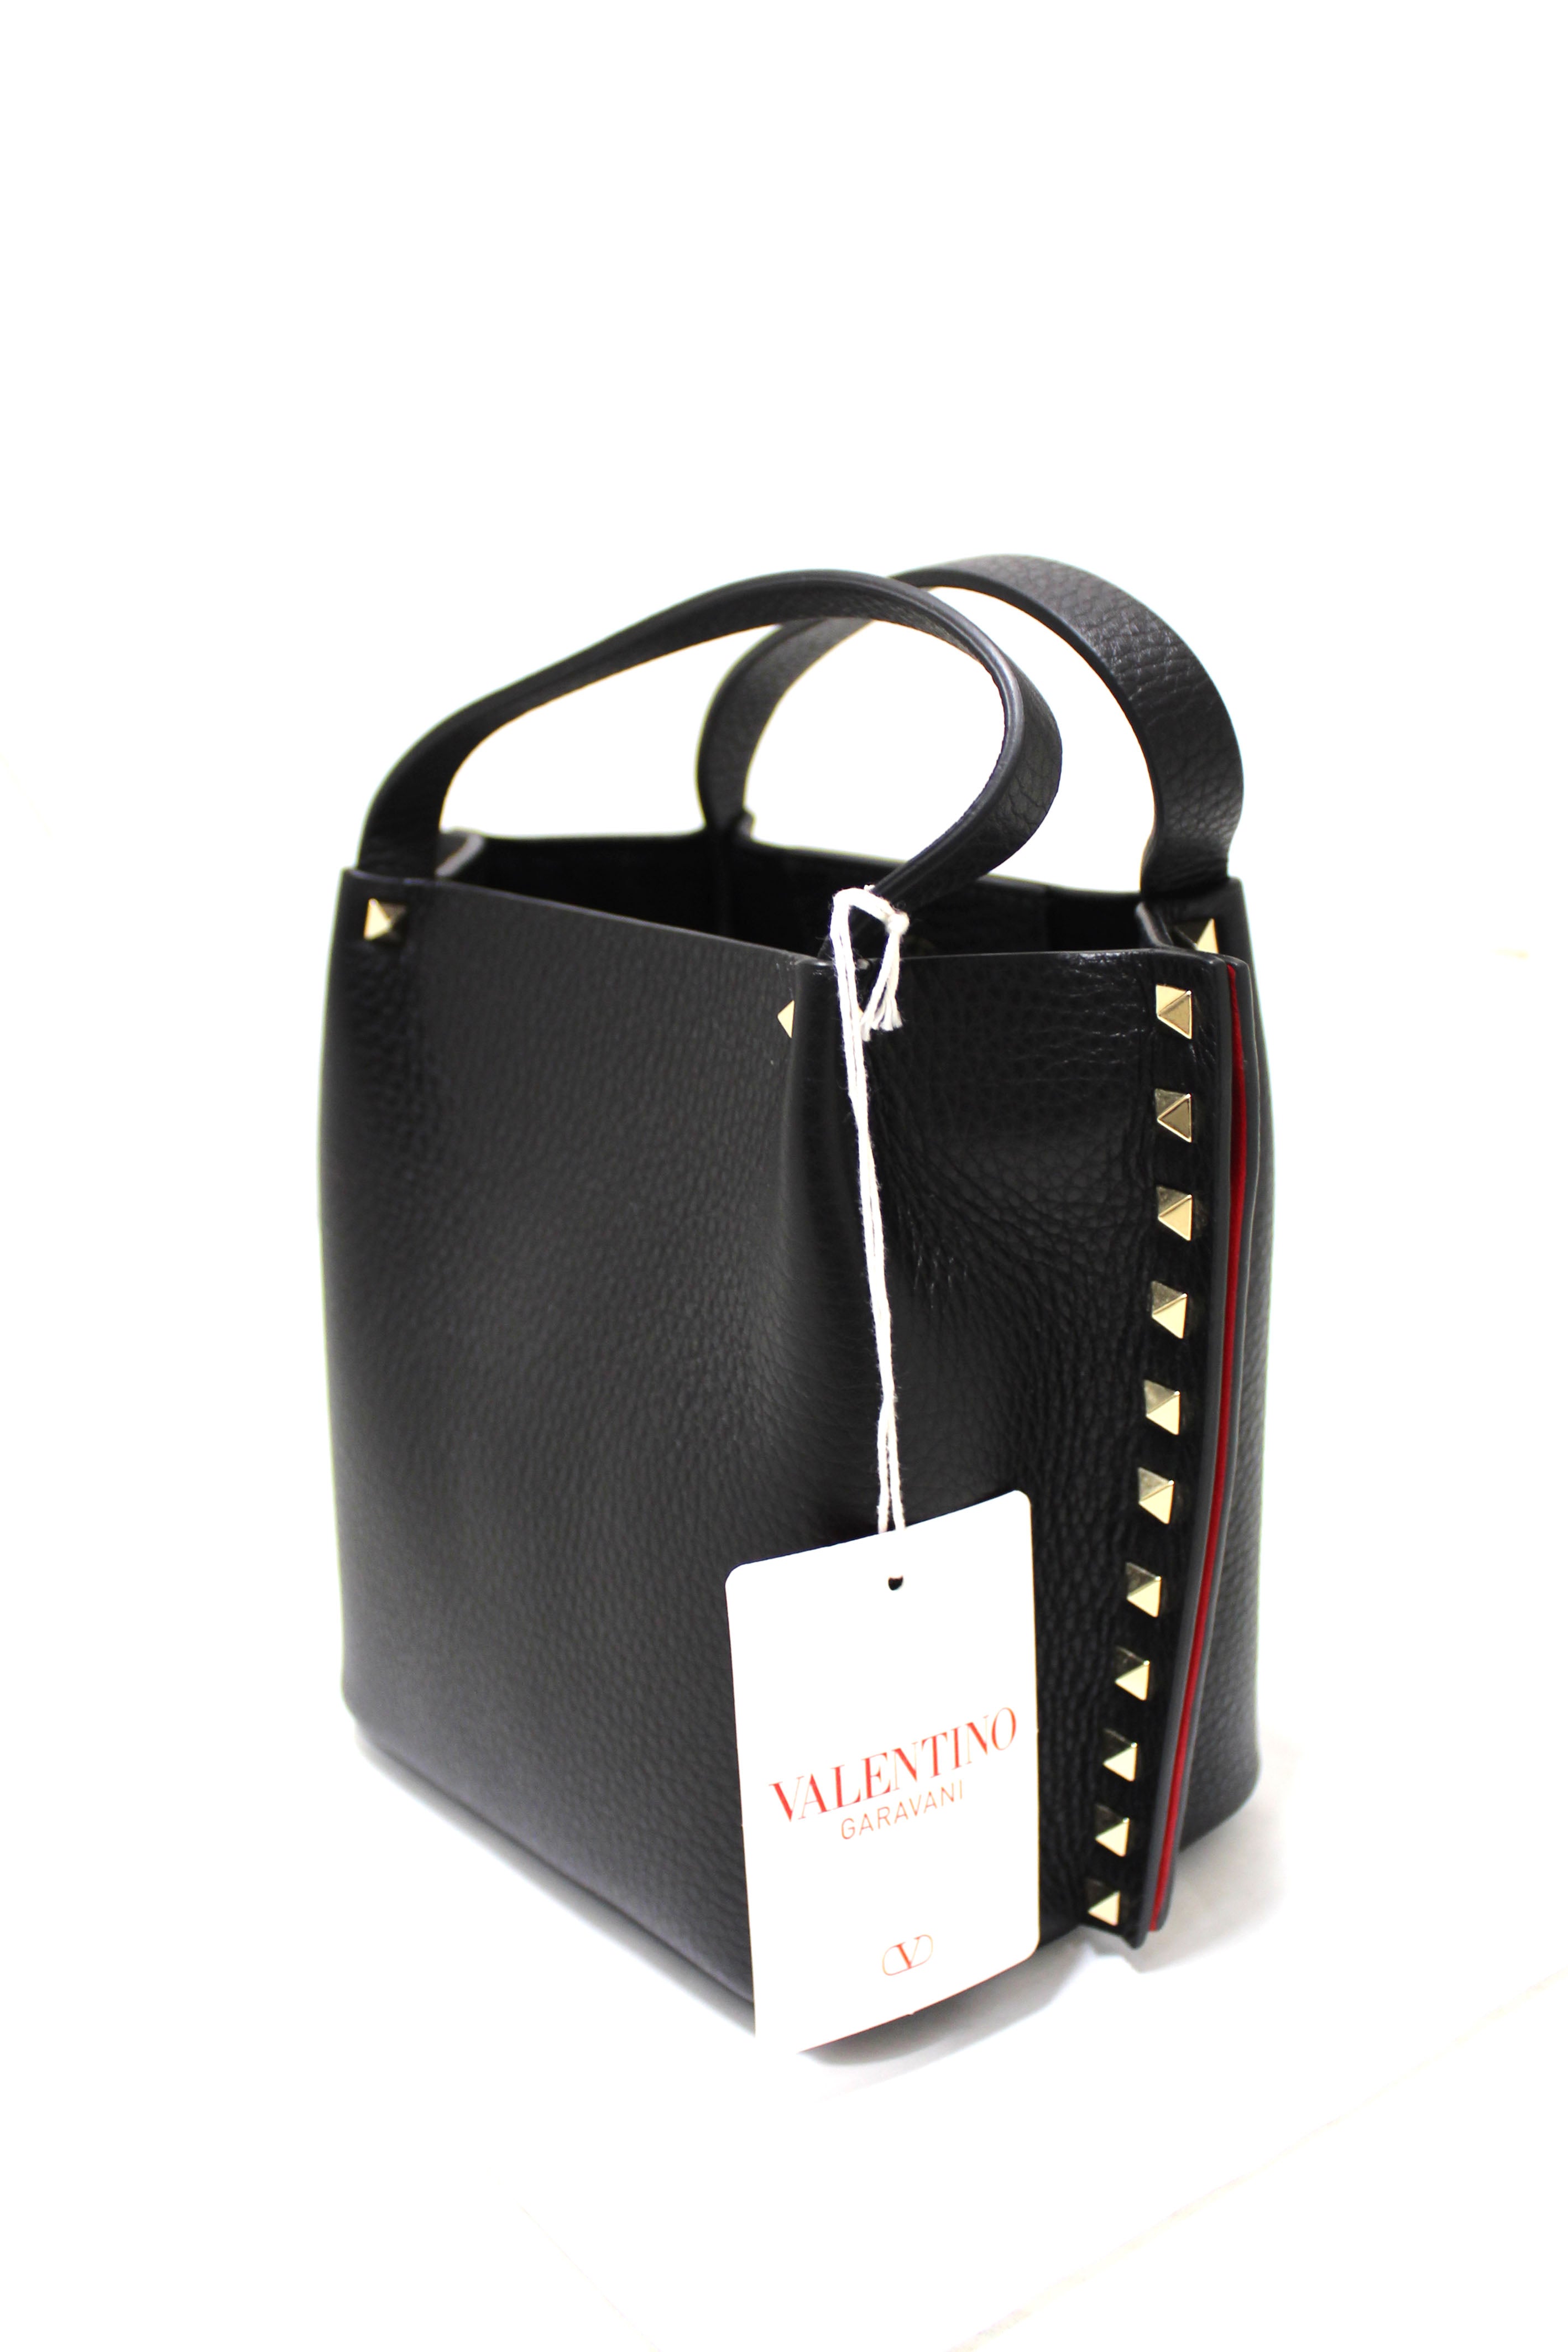 NEW Authentic Valentino Garavani Black Rockstud Grainy Calfskin Leather Crossbody Handbag